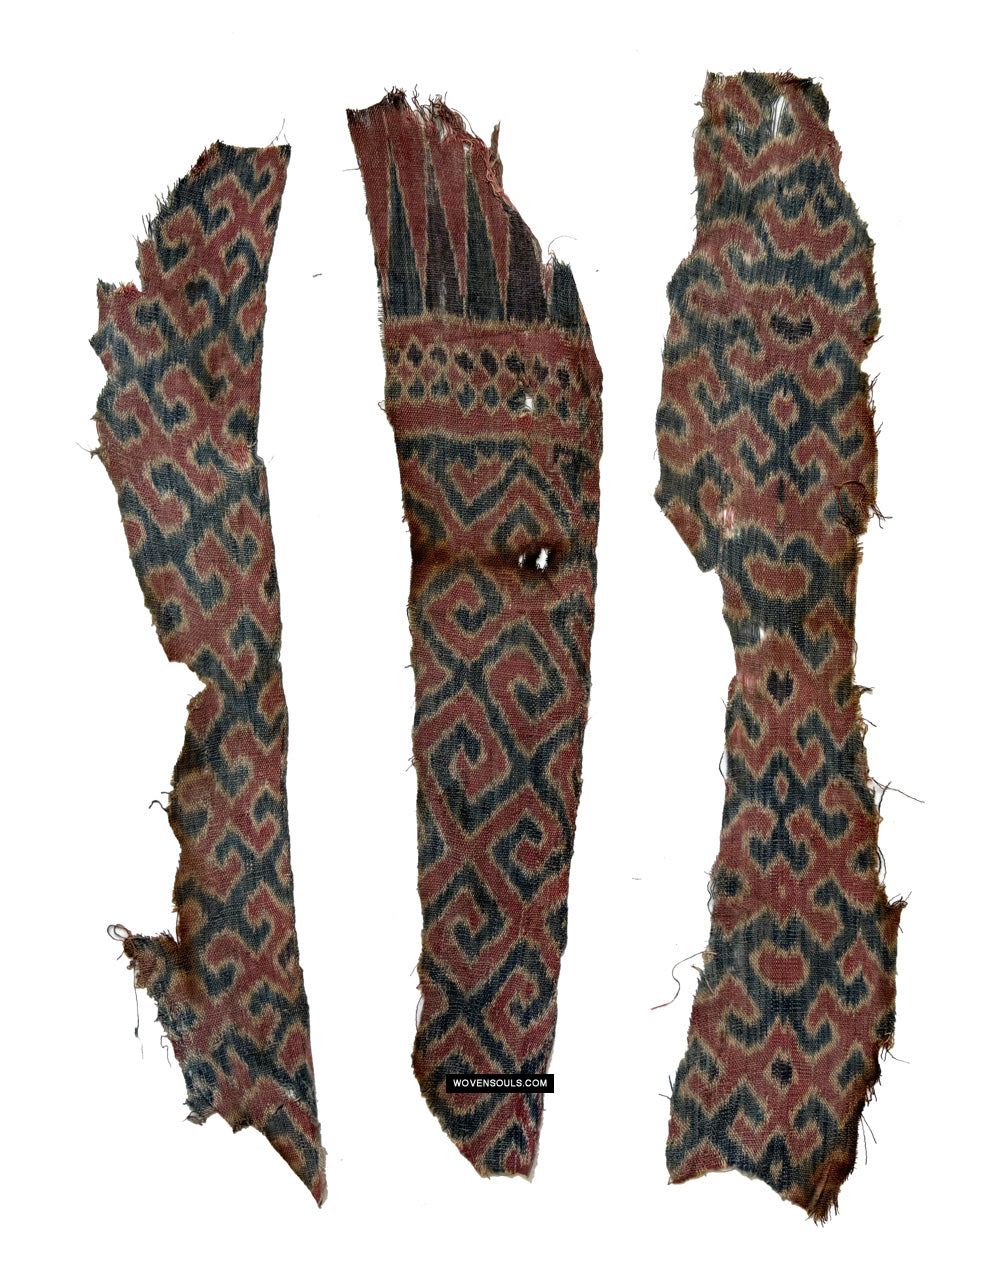 1950 Antique Sulawesi Ikat Fragment Group - 1800s